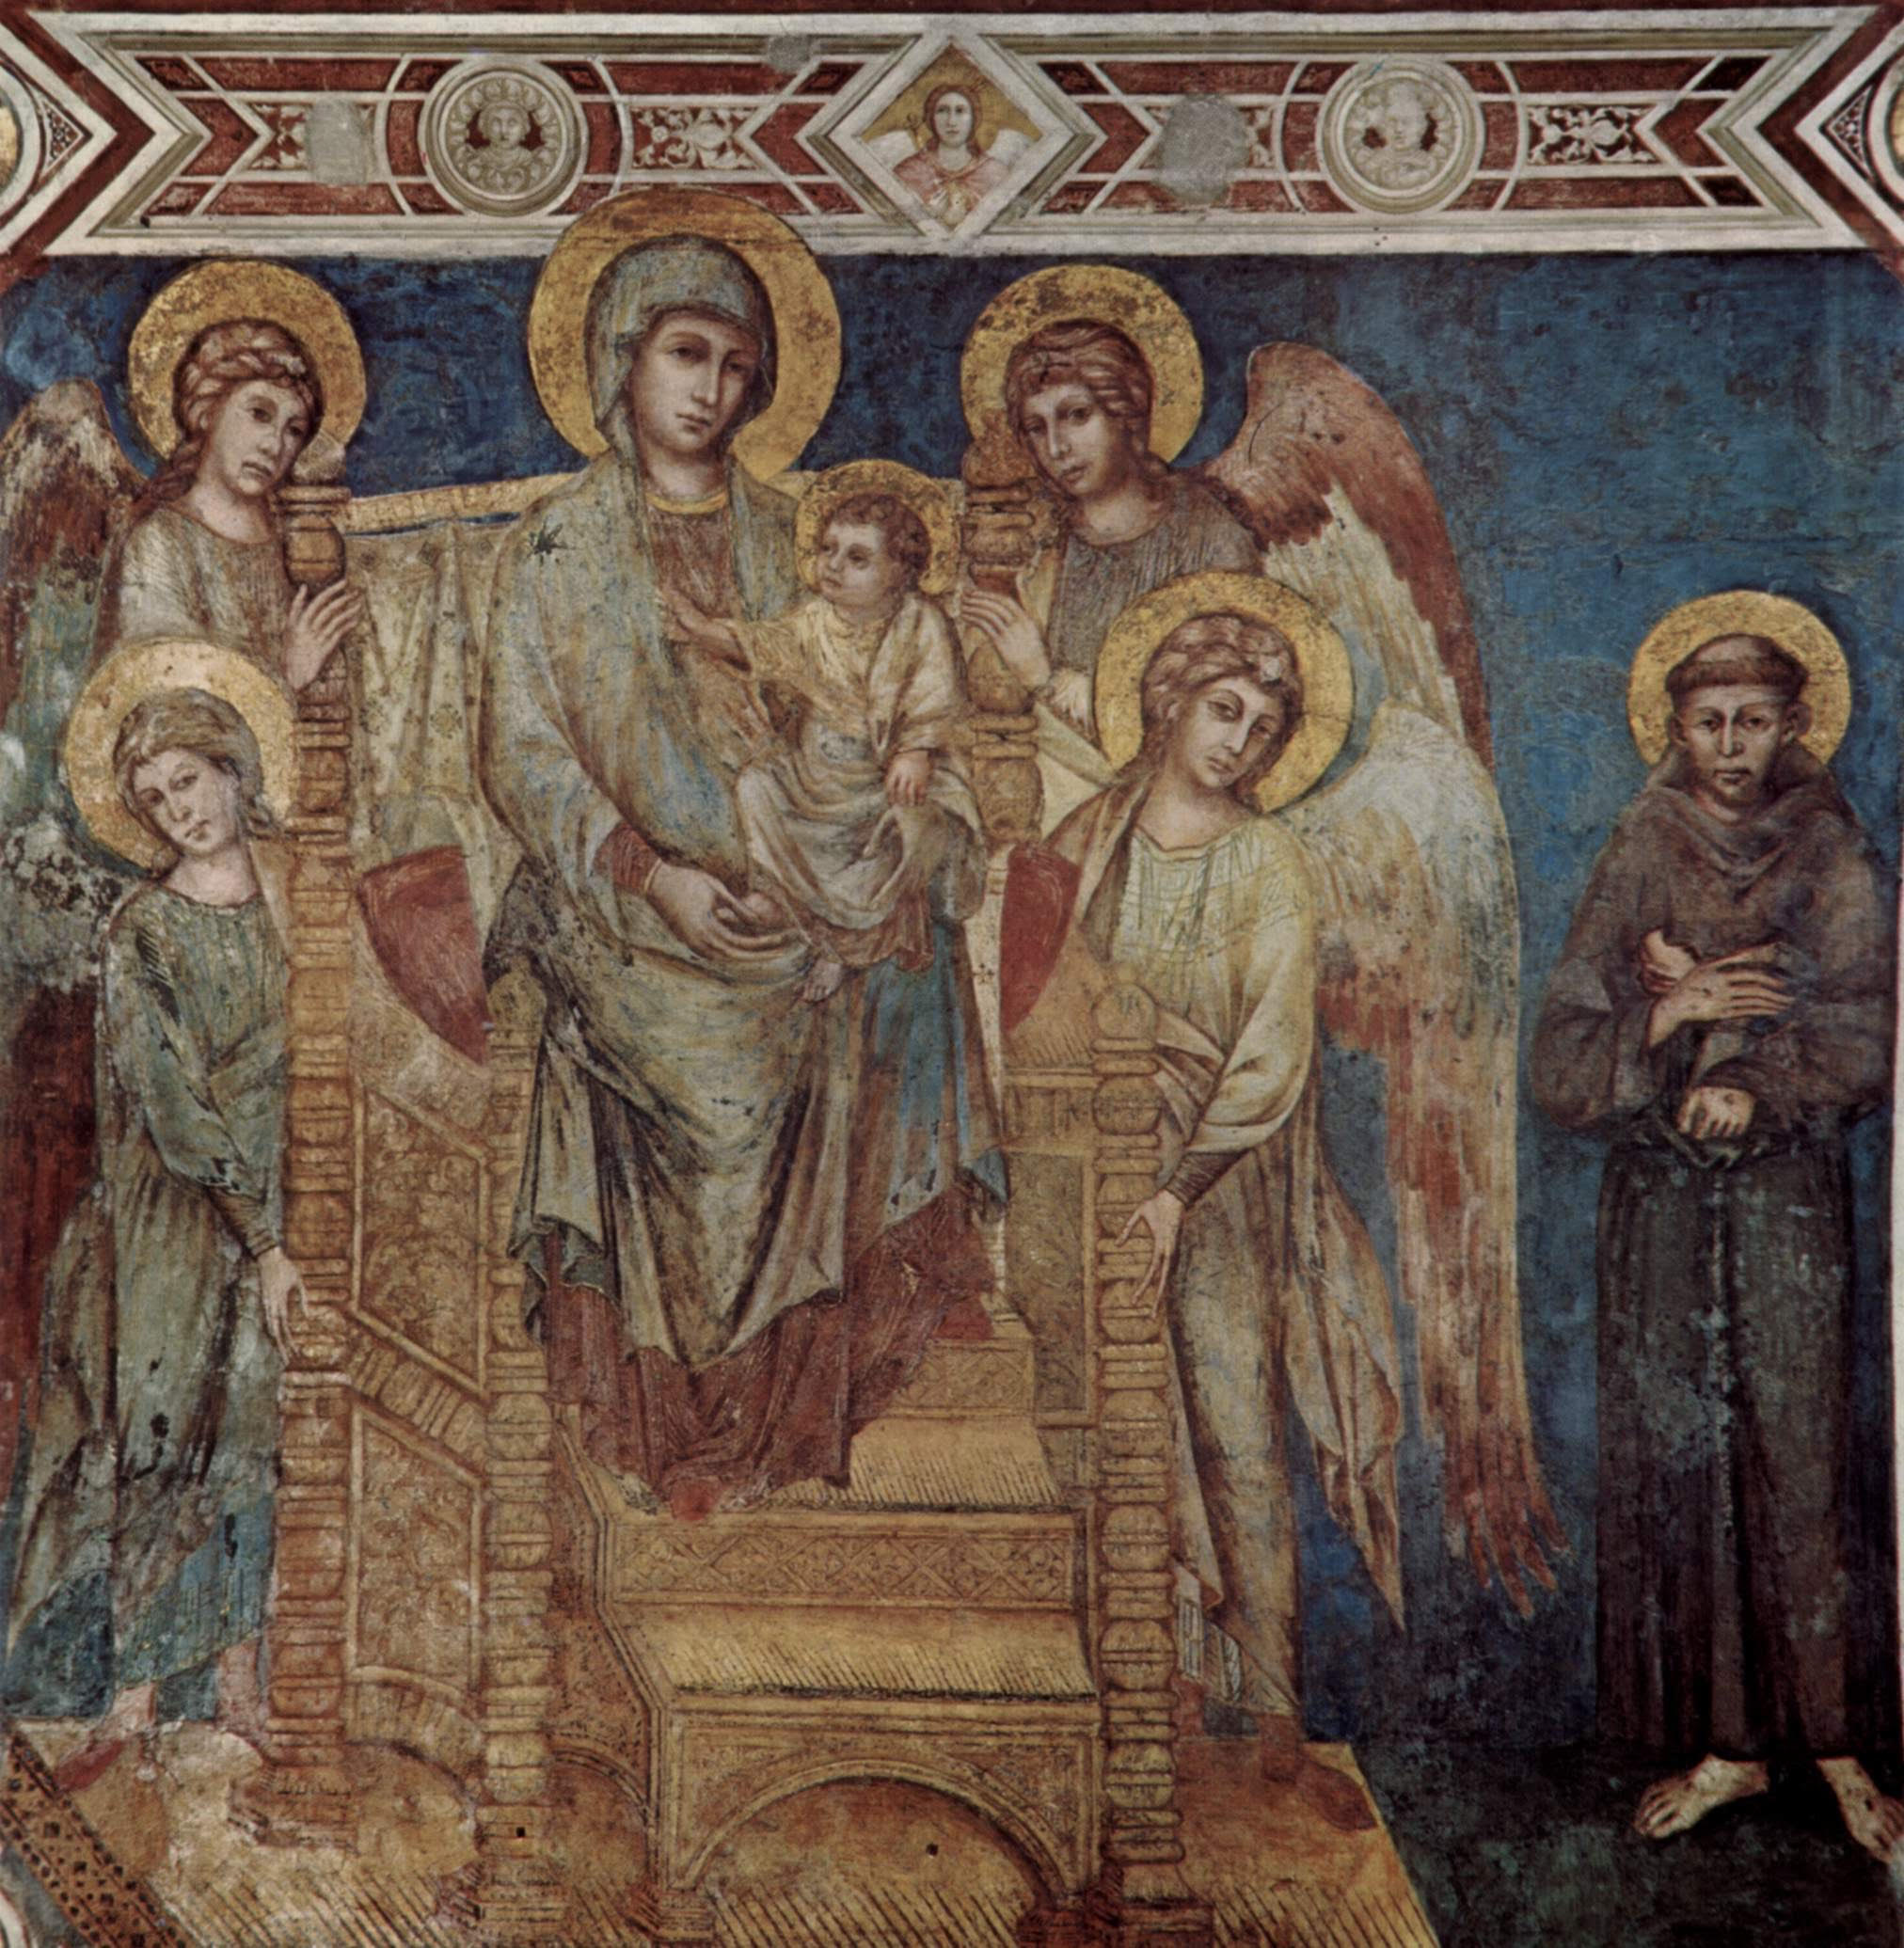 Cimabue’s St. Francis restored, courtesy of Ferrari